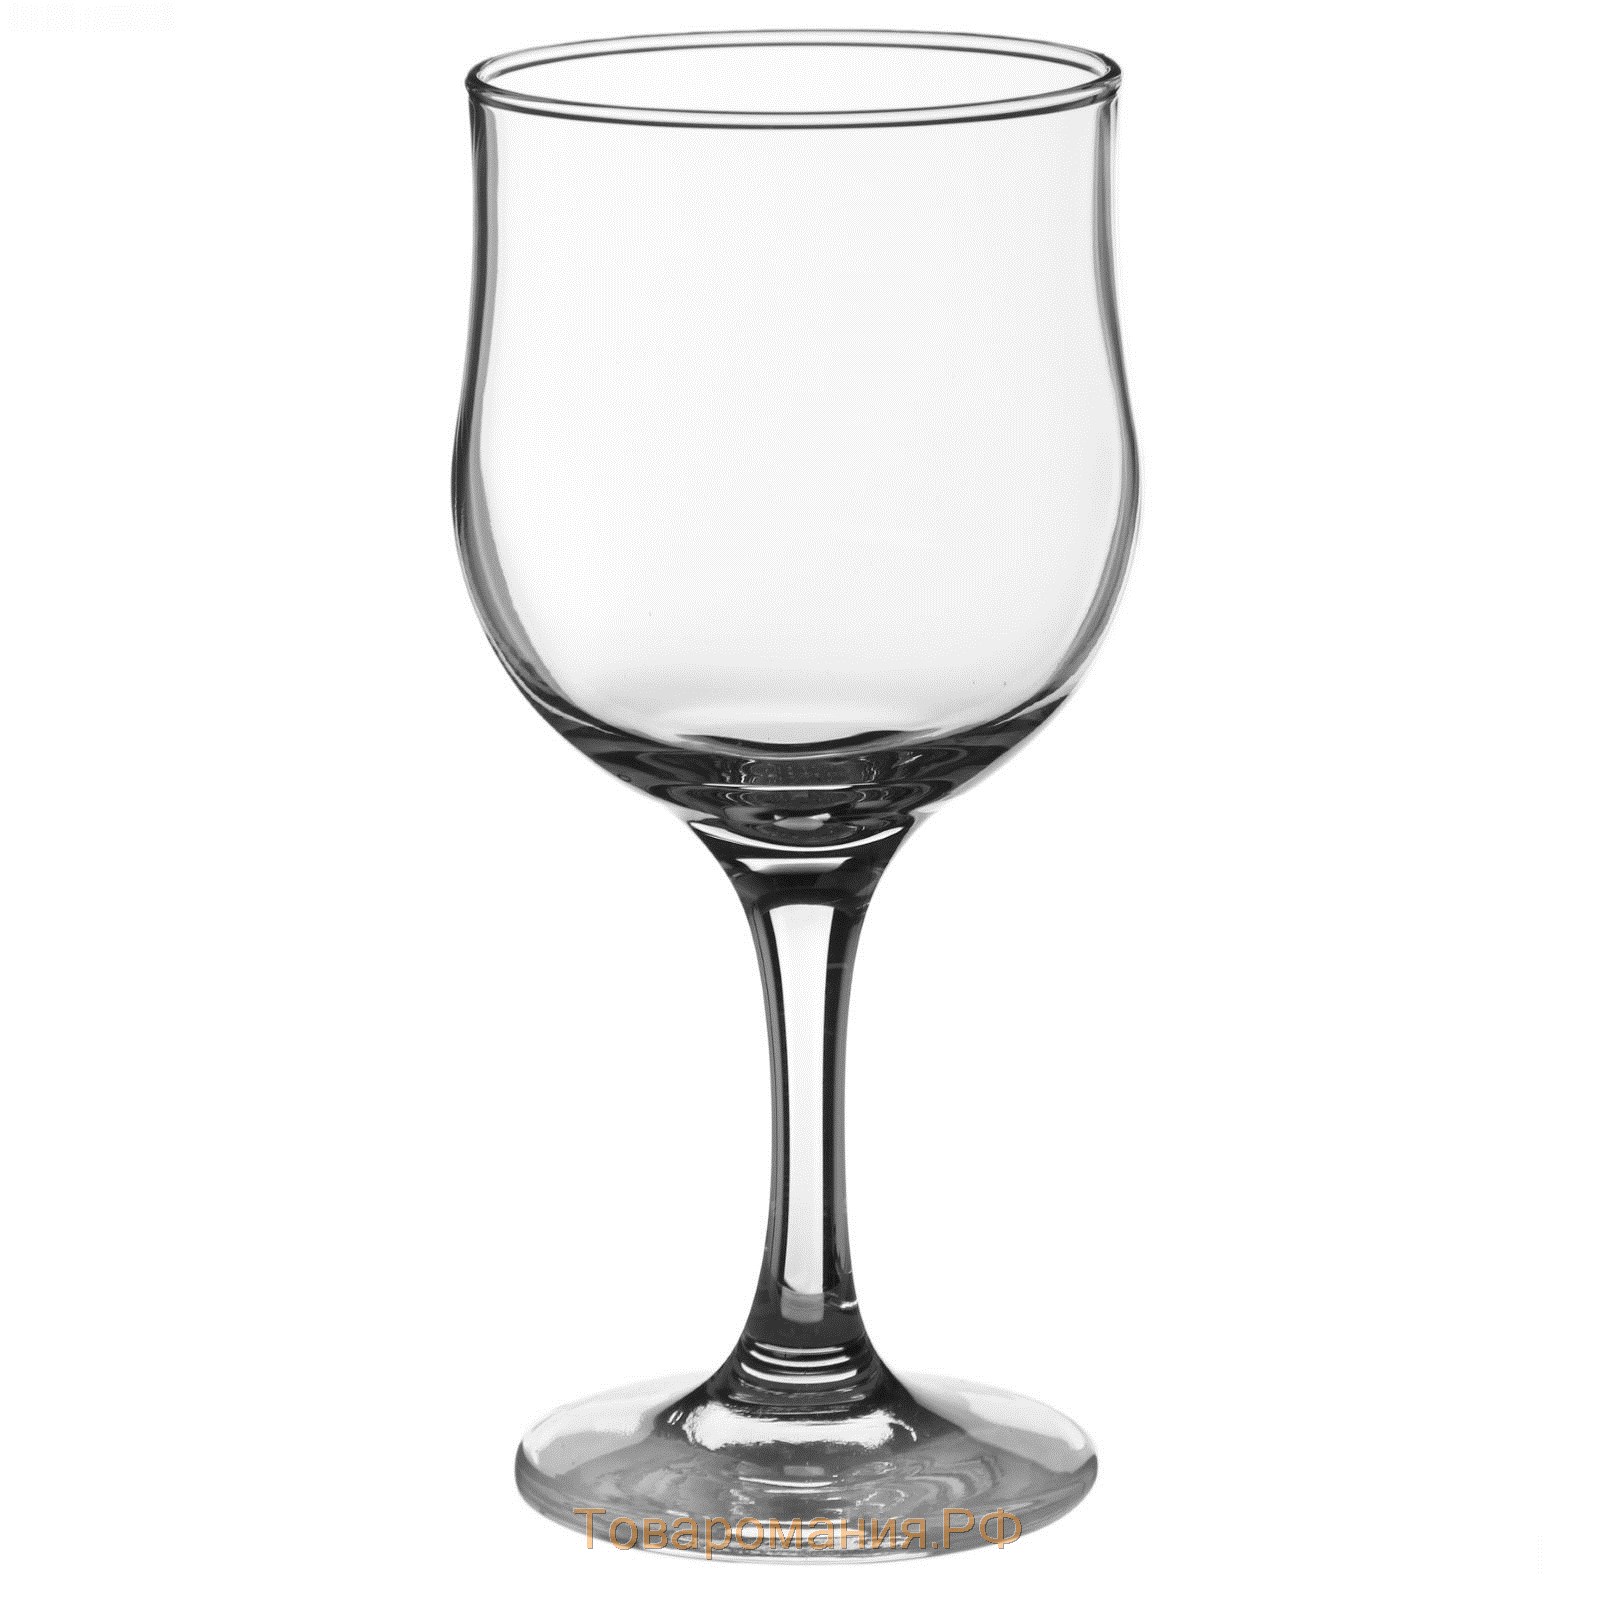 Набор стеклянных бокалов для вина Tulipe, 315 мл, 6 шт